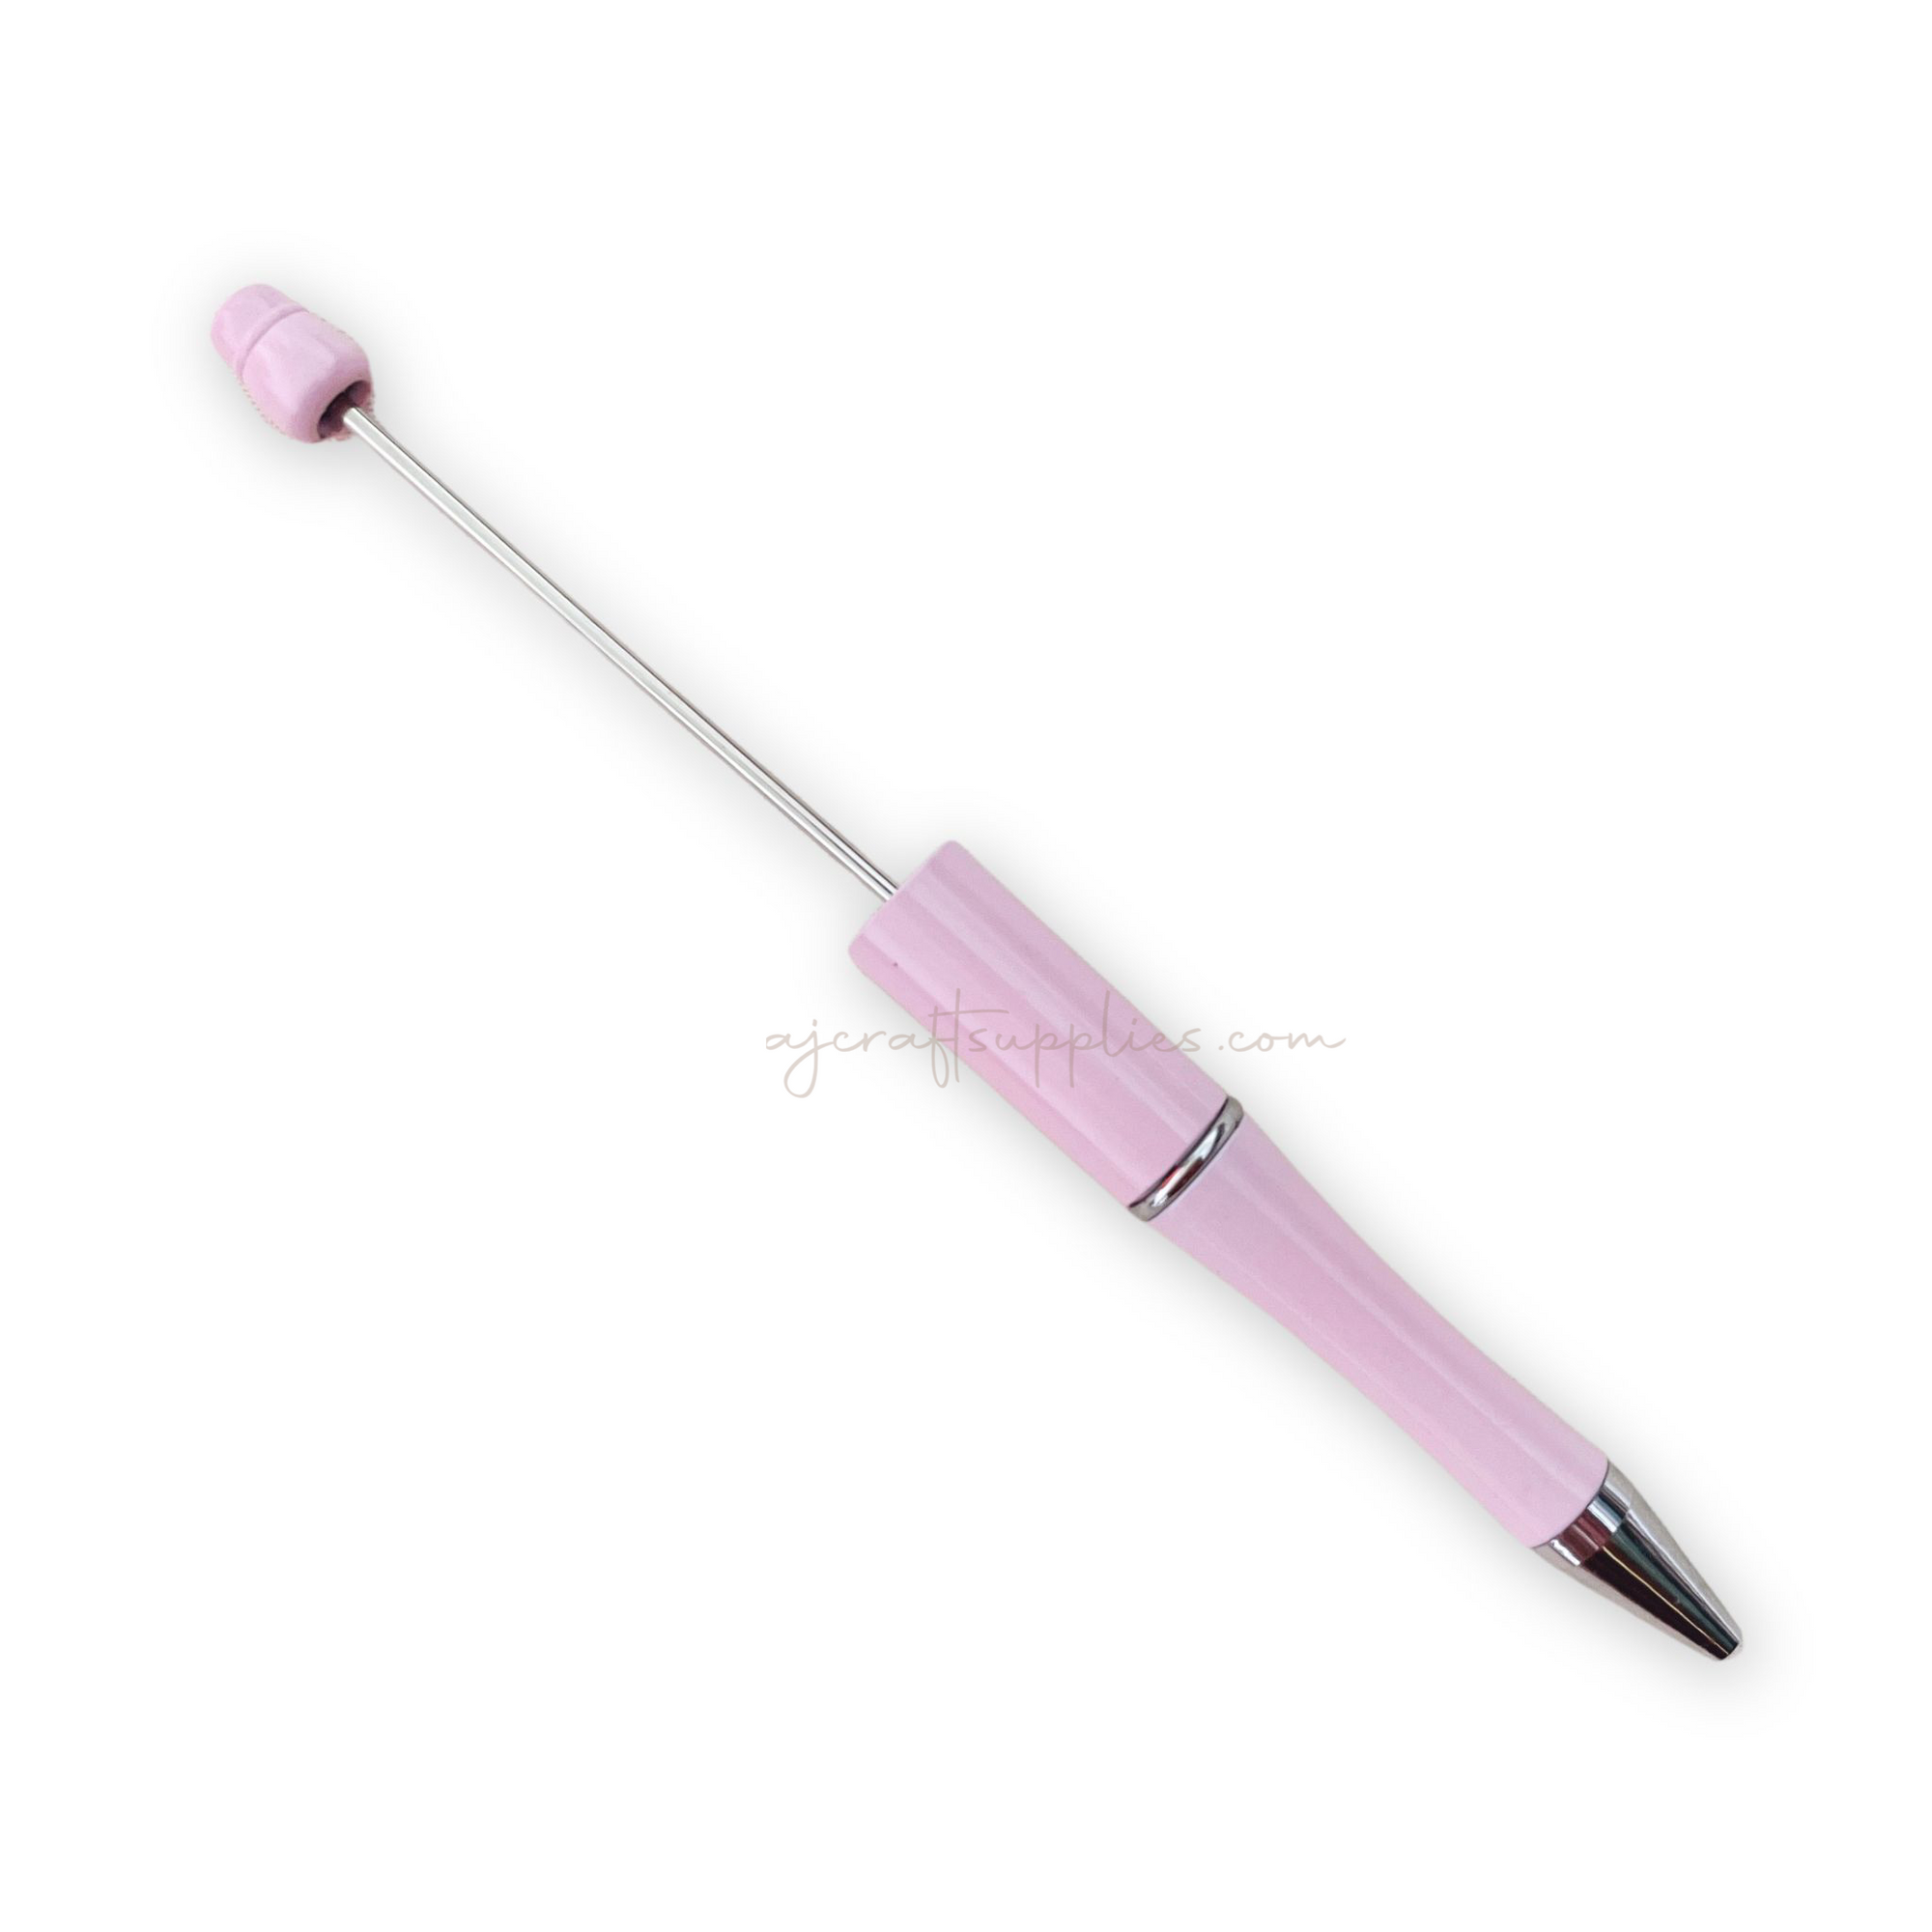 Beadable Pen Blanks - Brushed Rose Pink - Each - AJ Craft Supplies